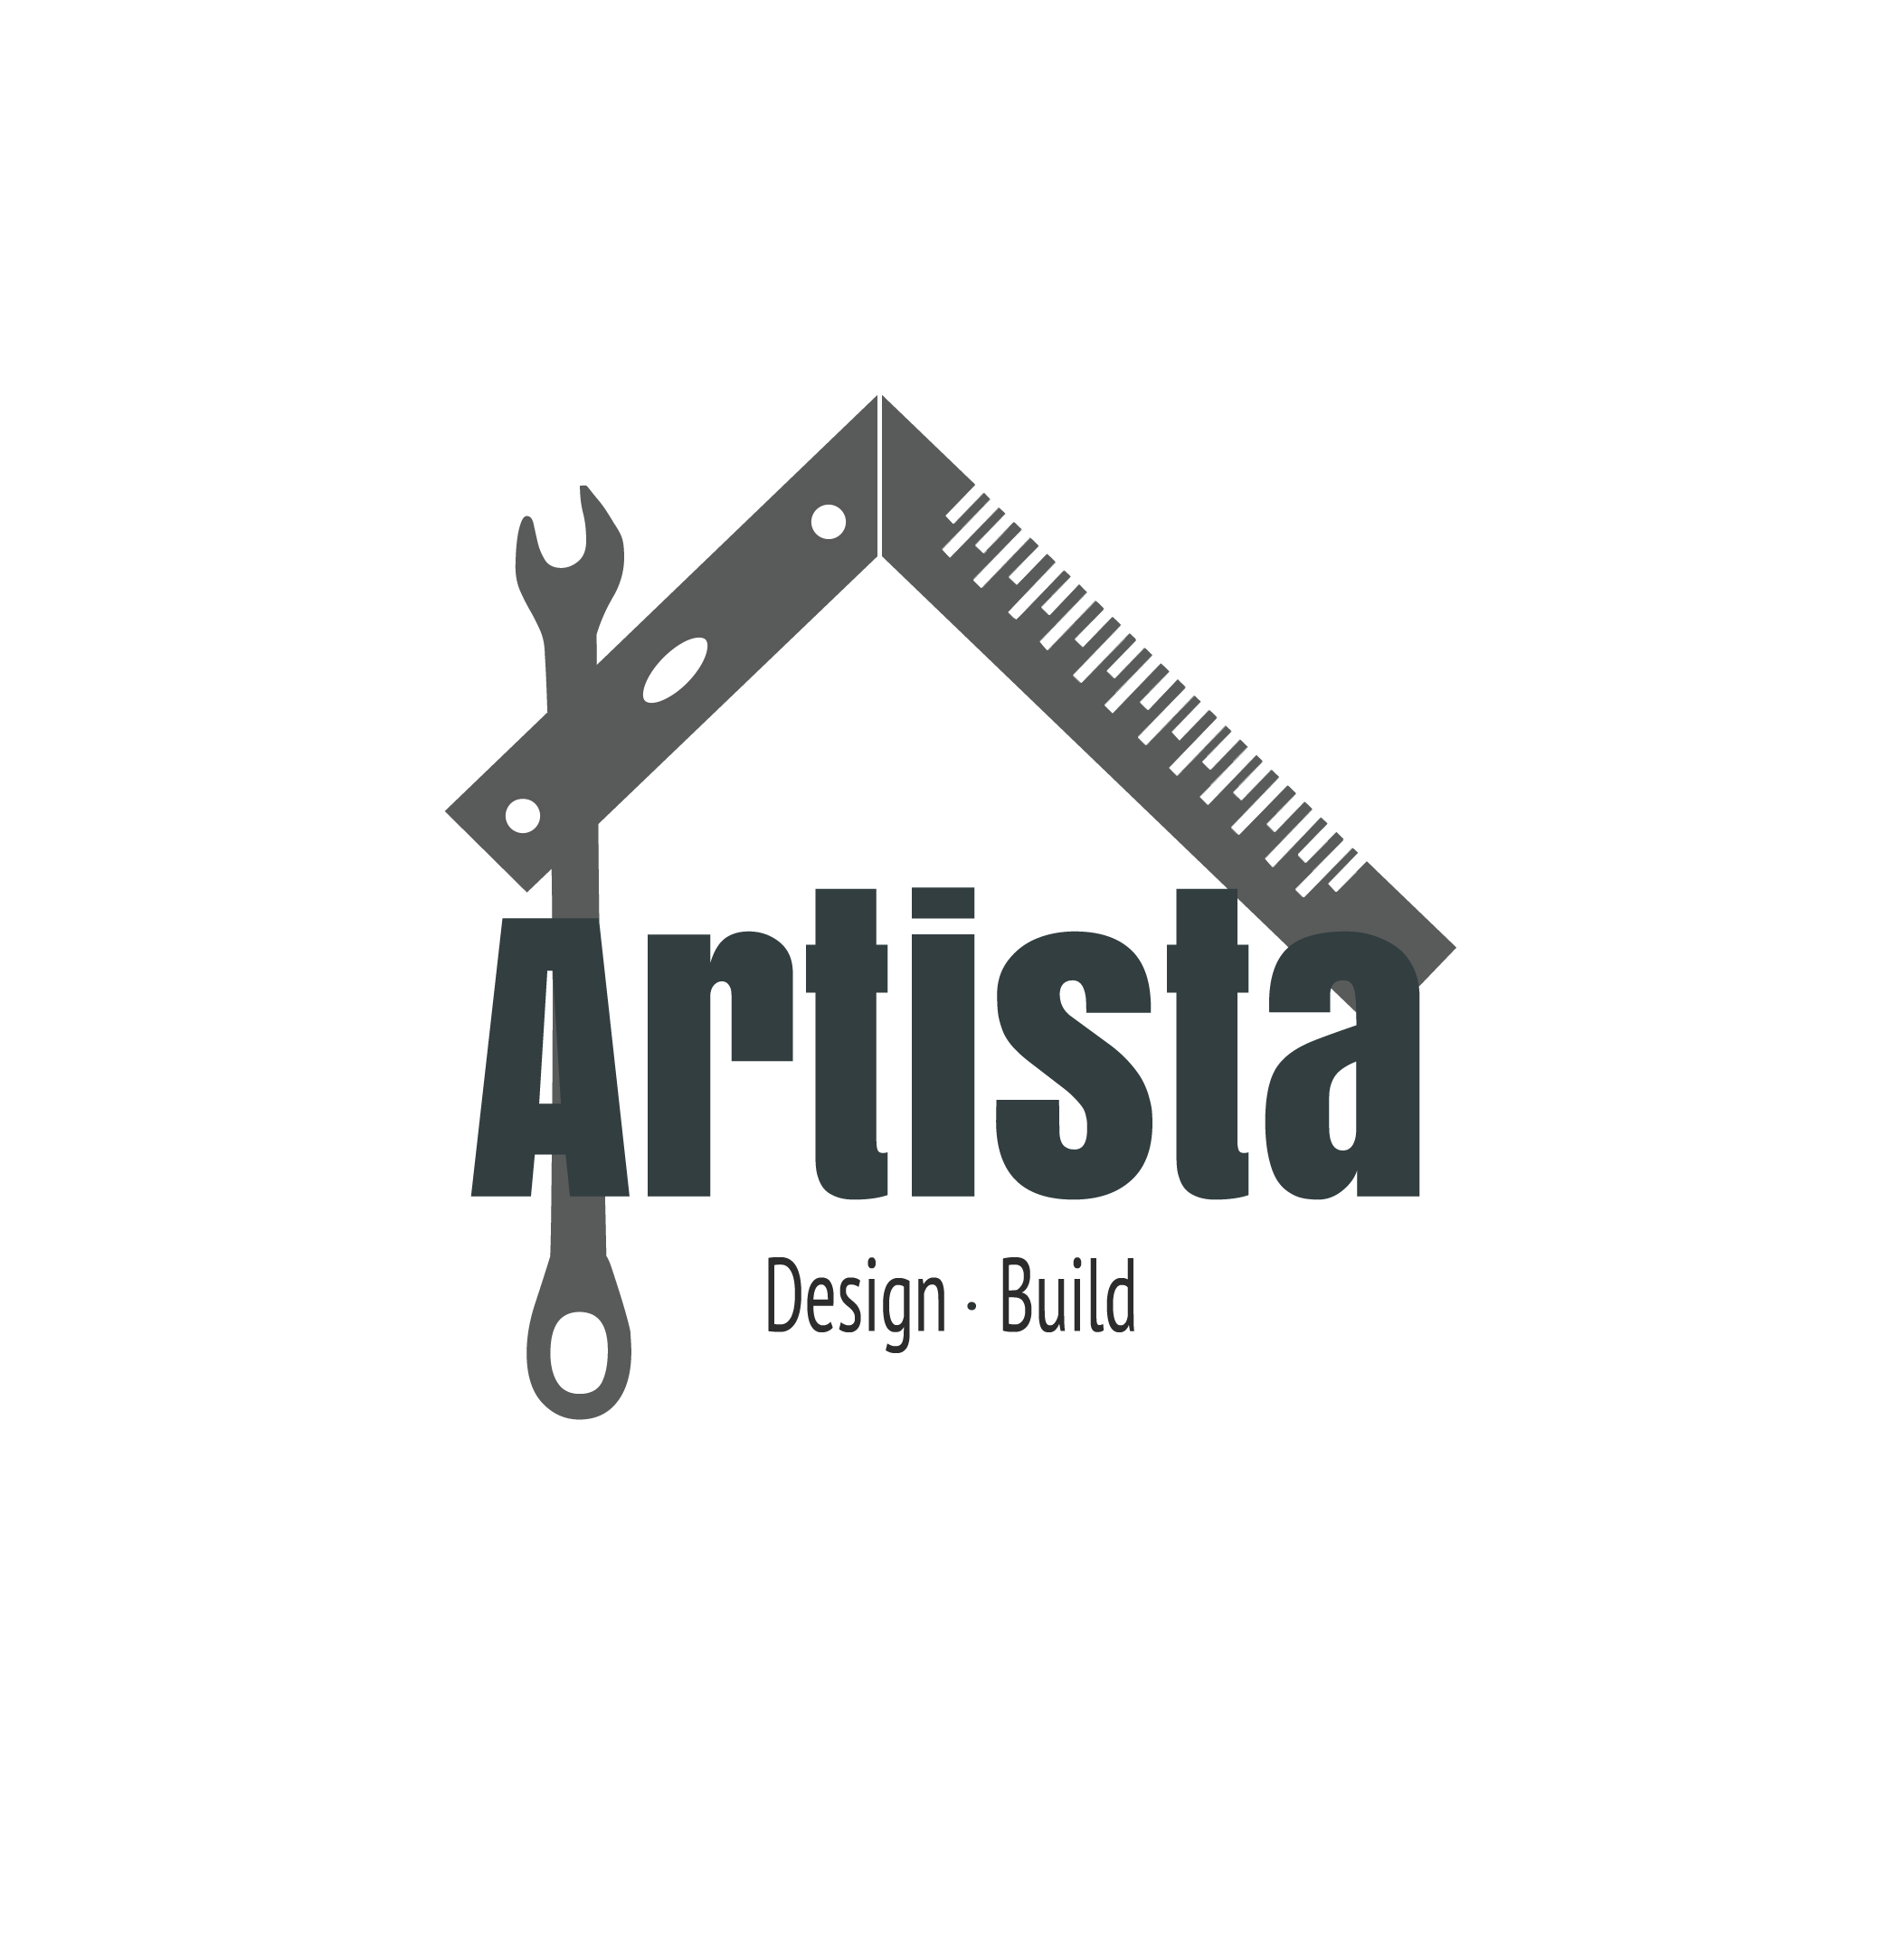 Artista Design Build Logo